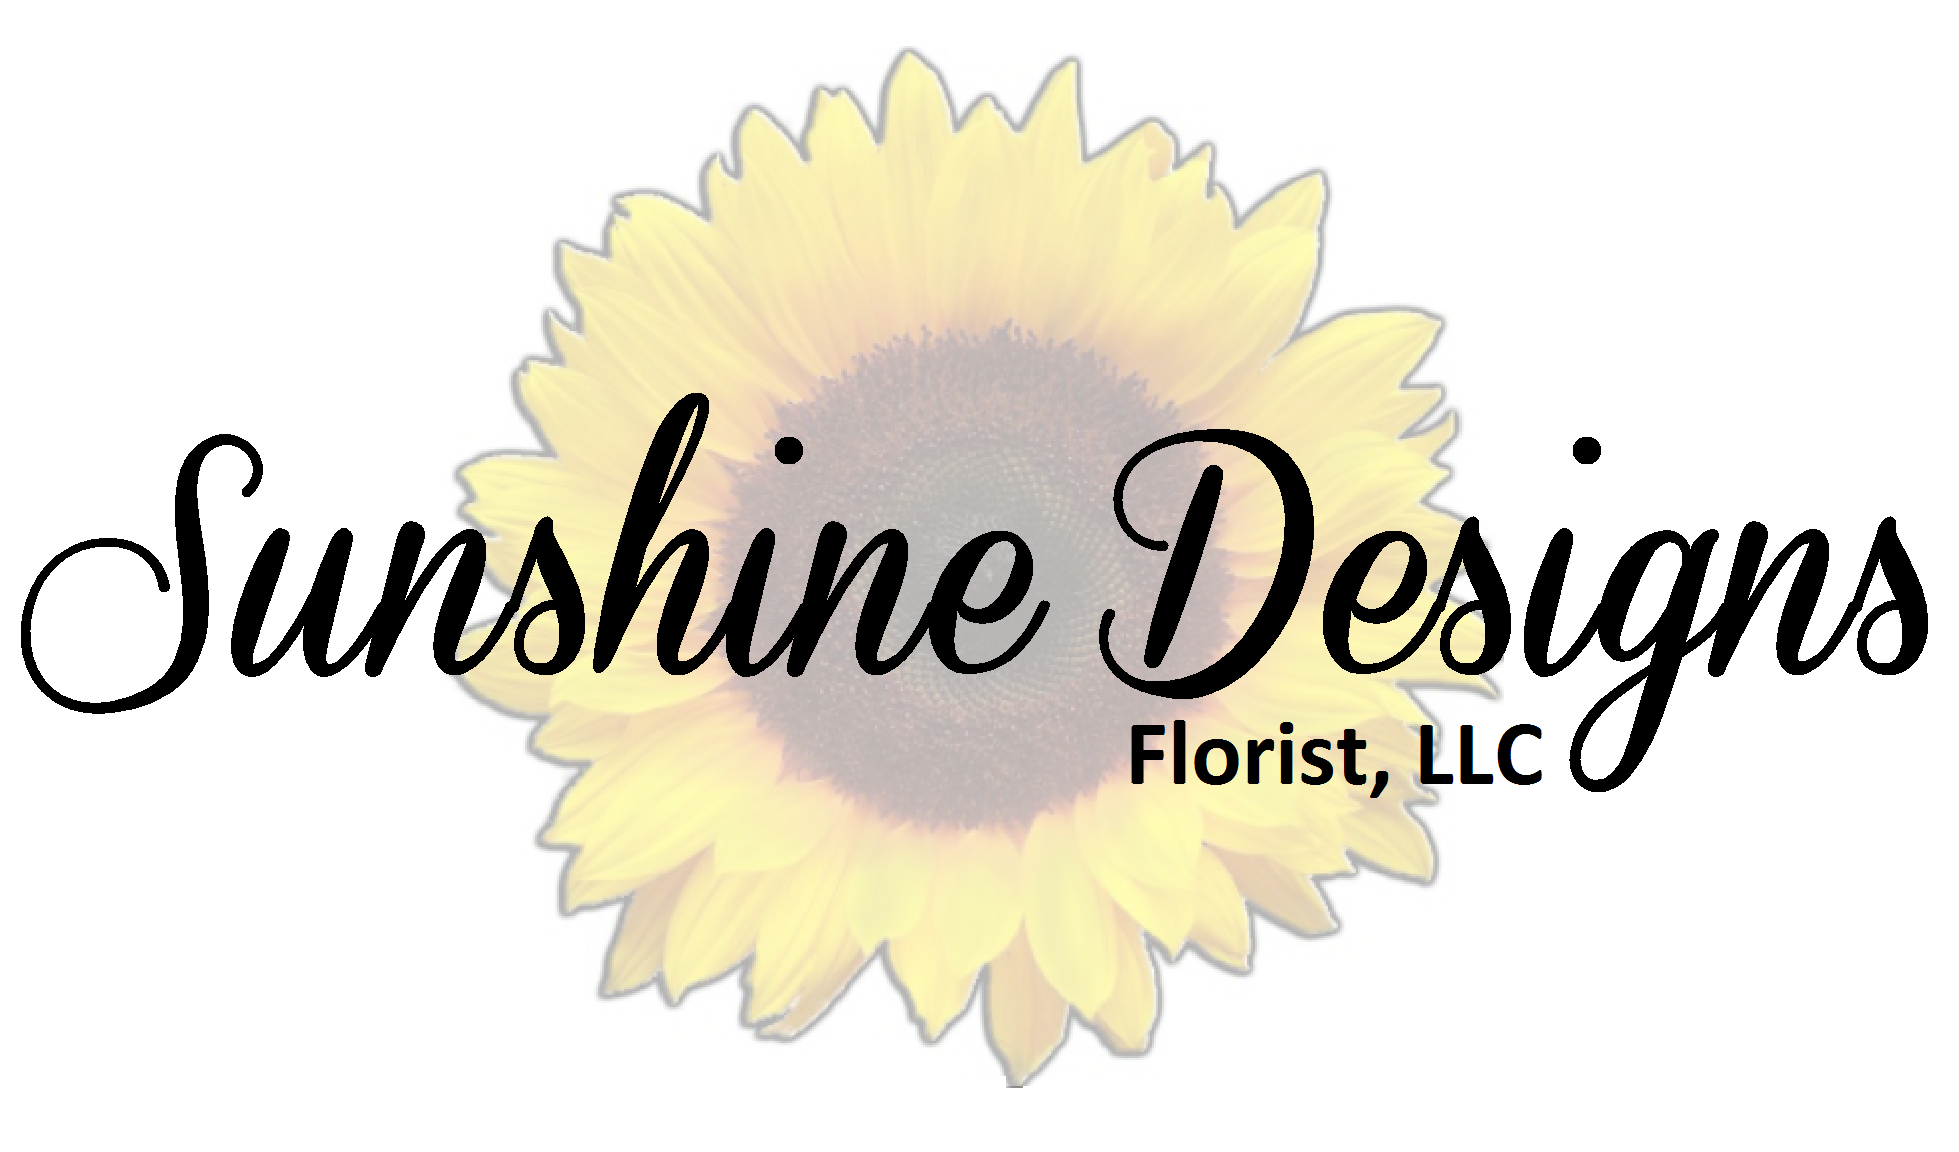 Sunshine Design